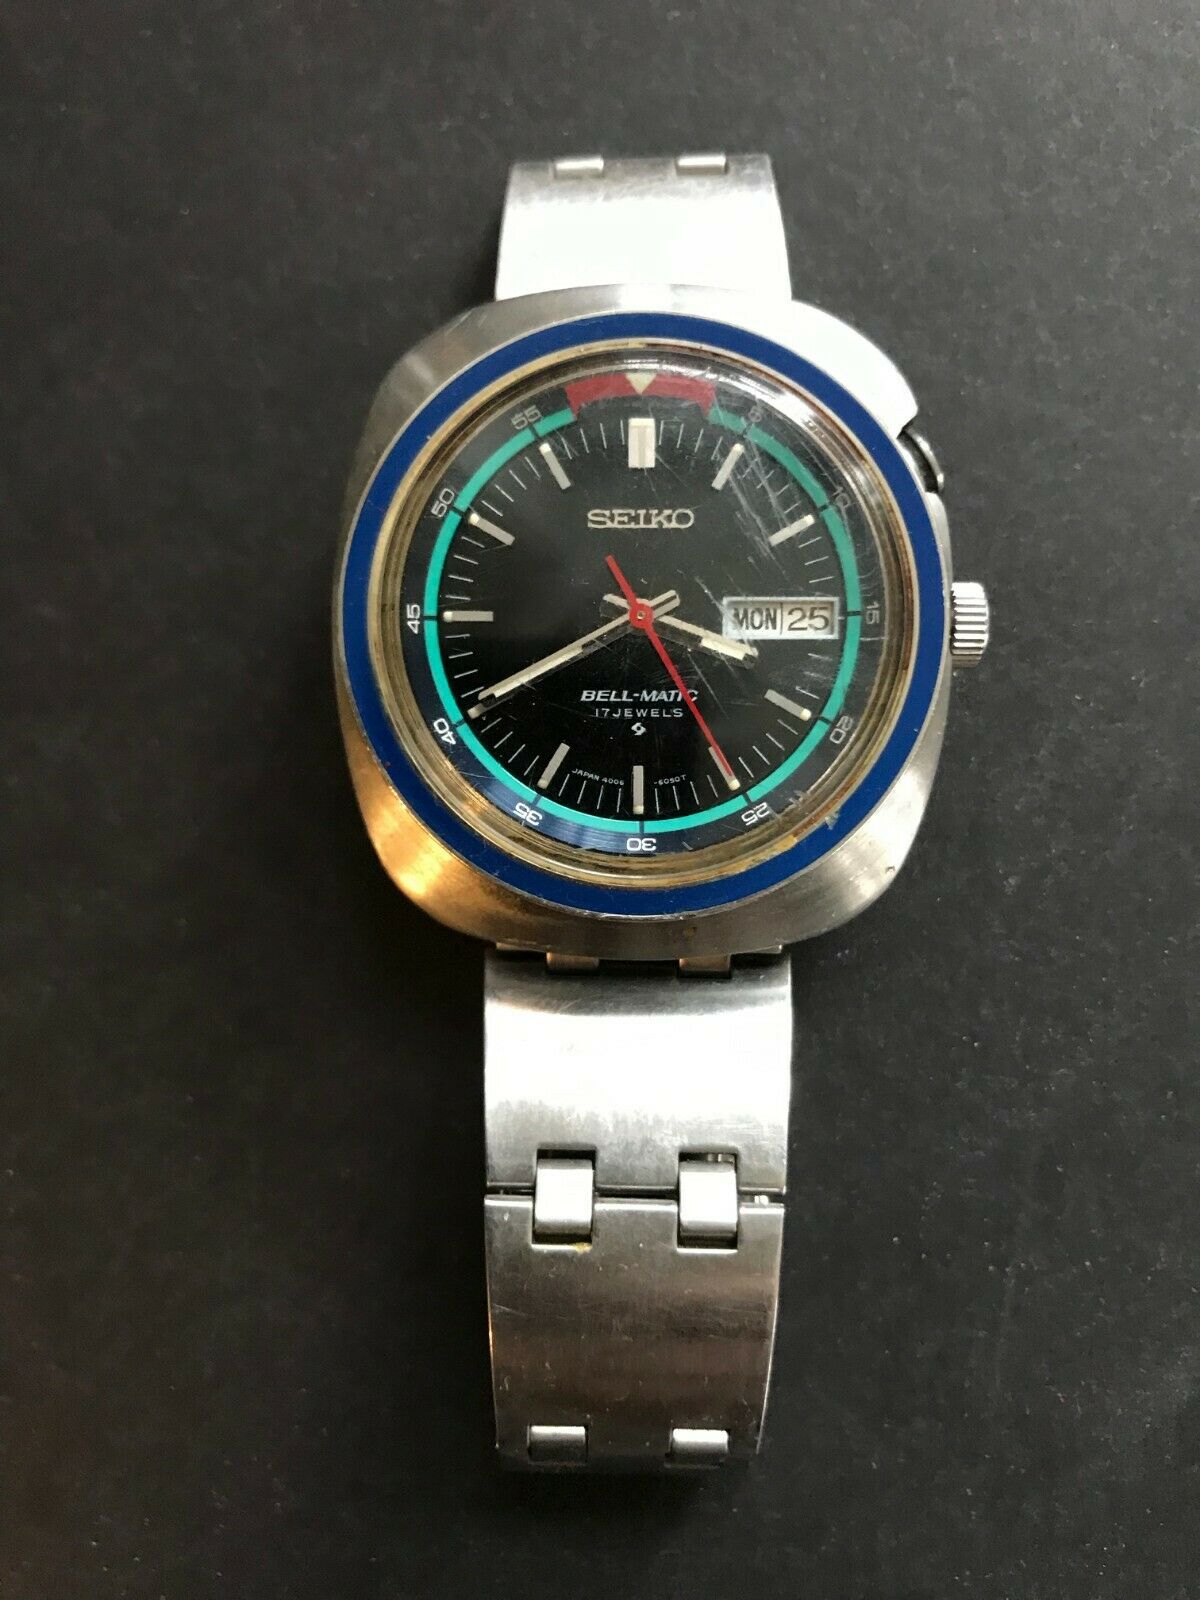 VINTAGE Seiko Bell-Matic 17 Jewels 4006-6027 Wrist Watch | WatchCharts